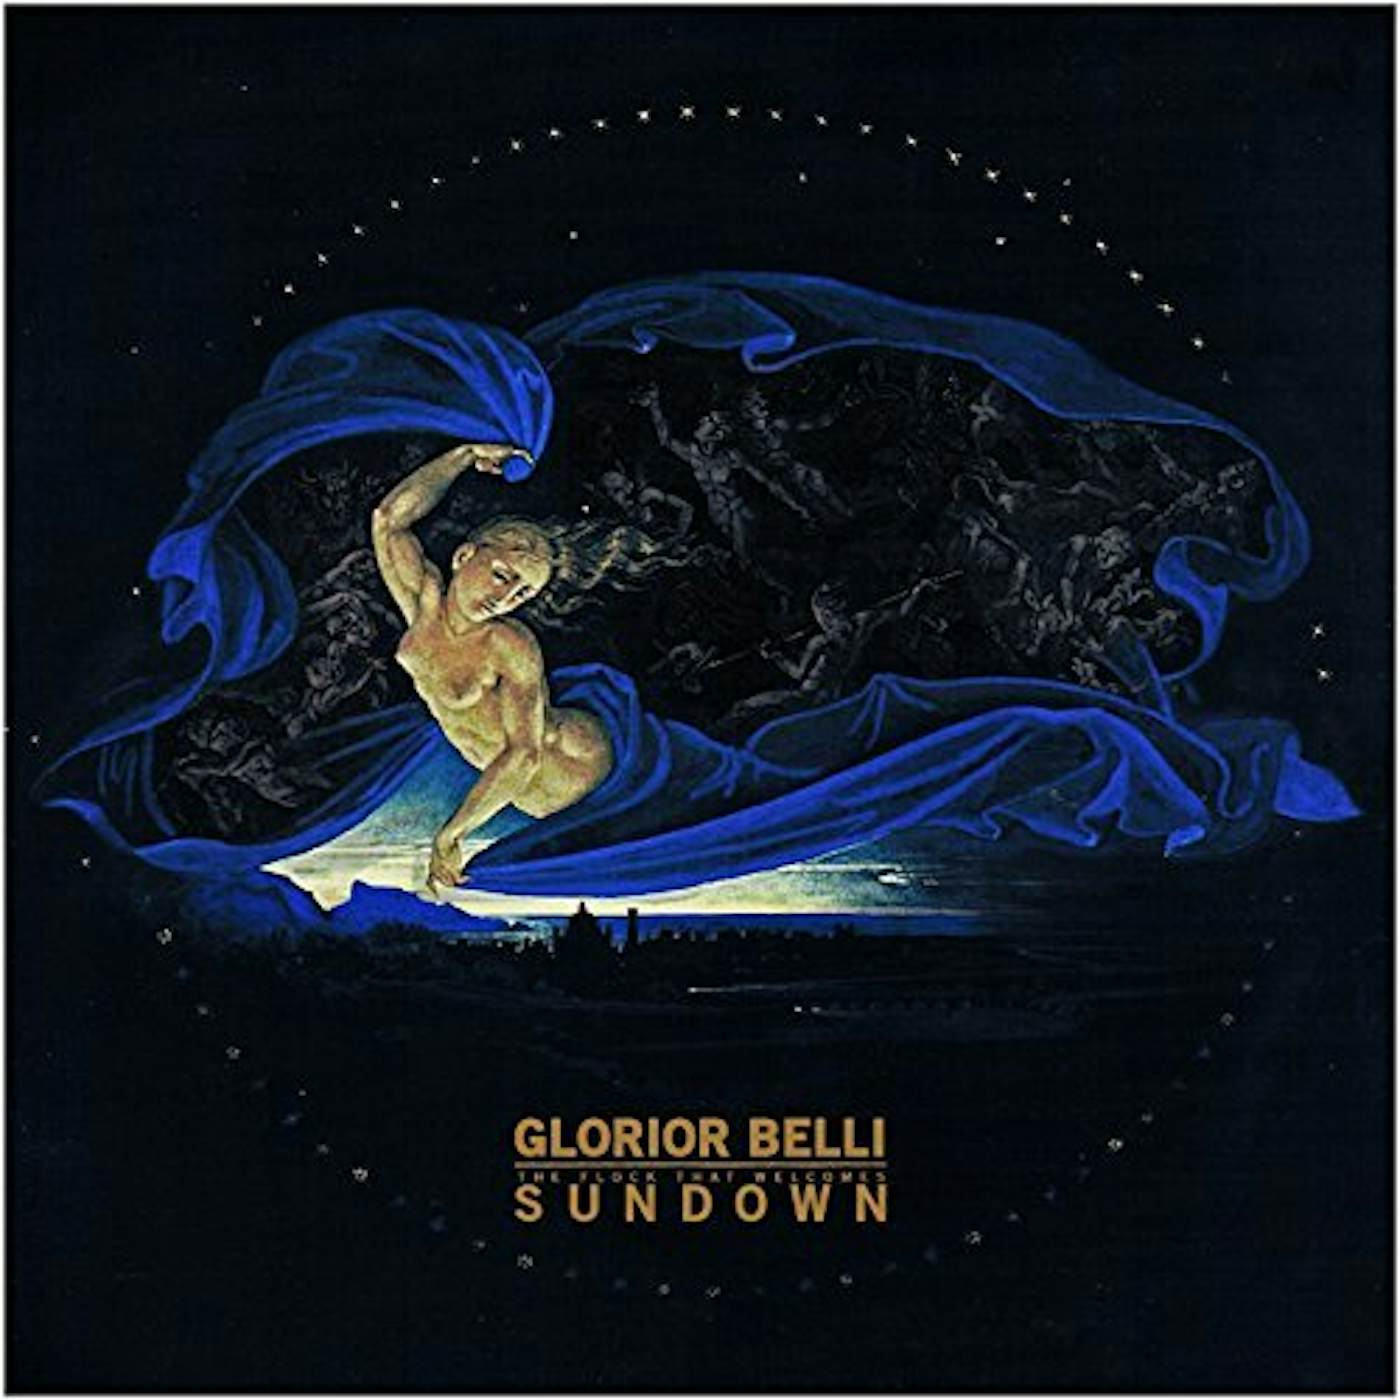 Glorior Belli SUNDOWN (THE FLOCK THAT WELCOMES) CD